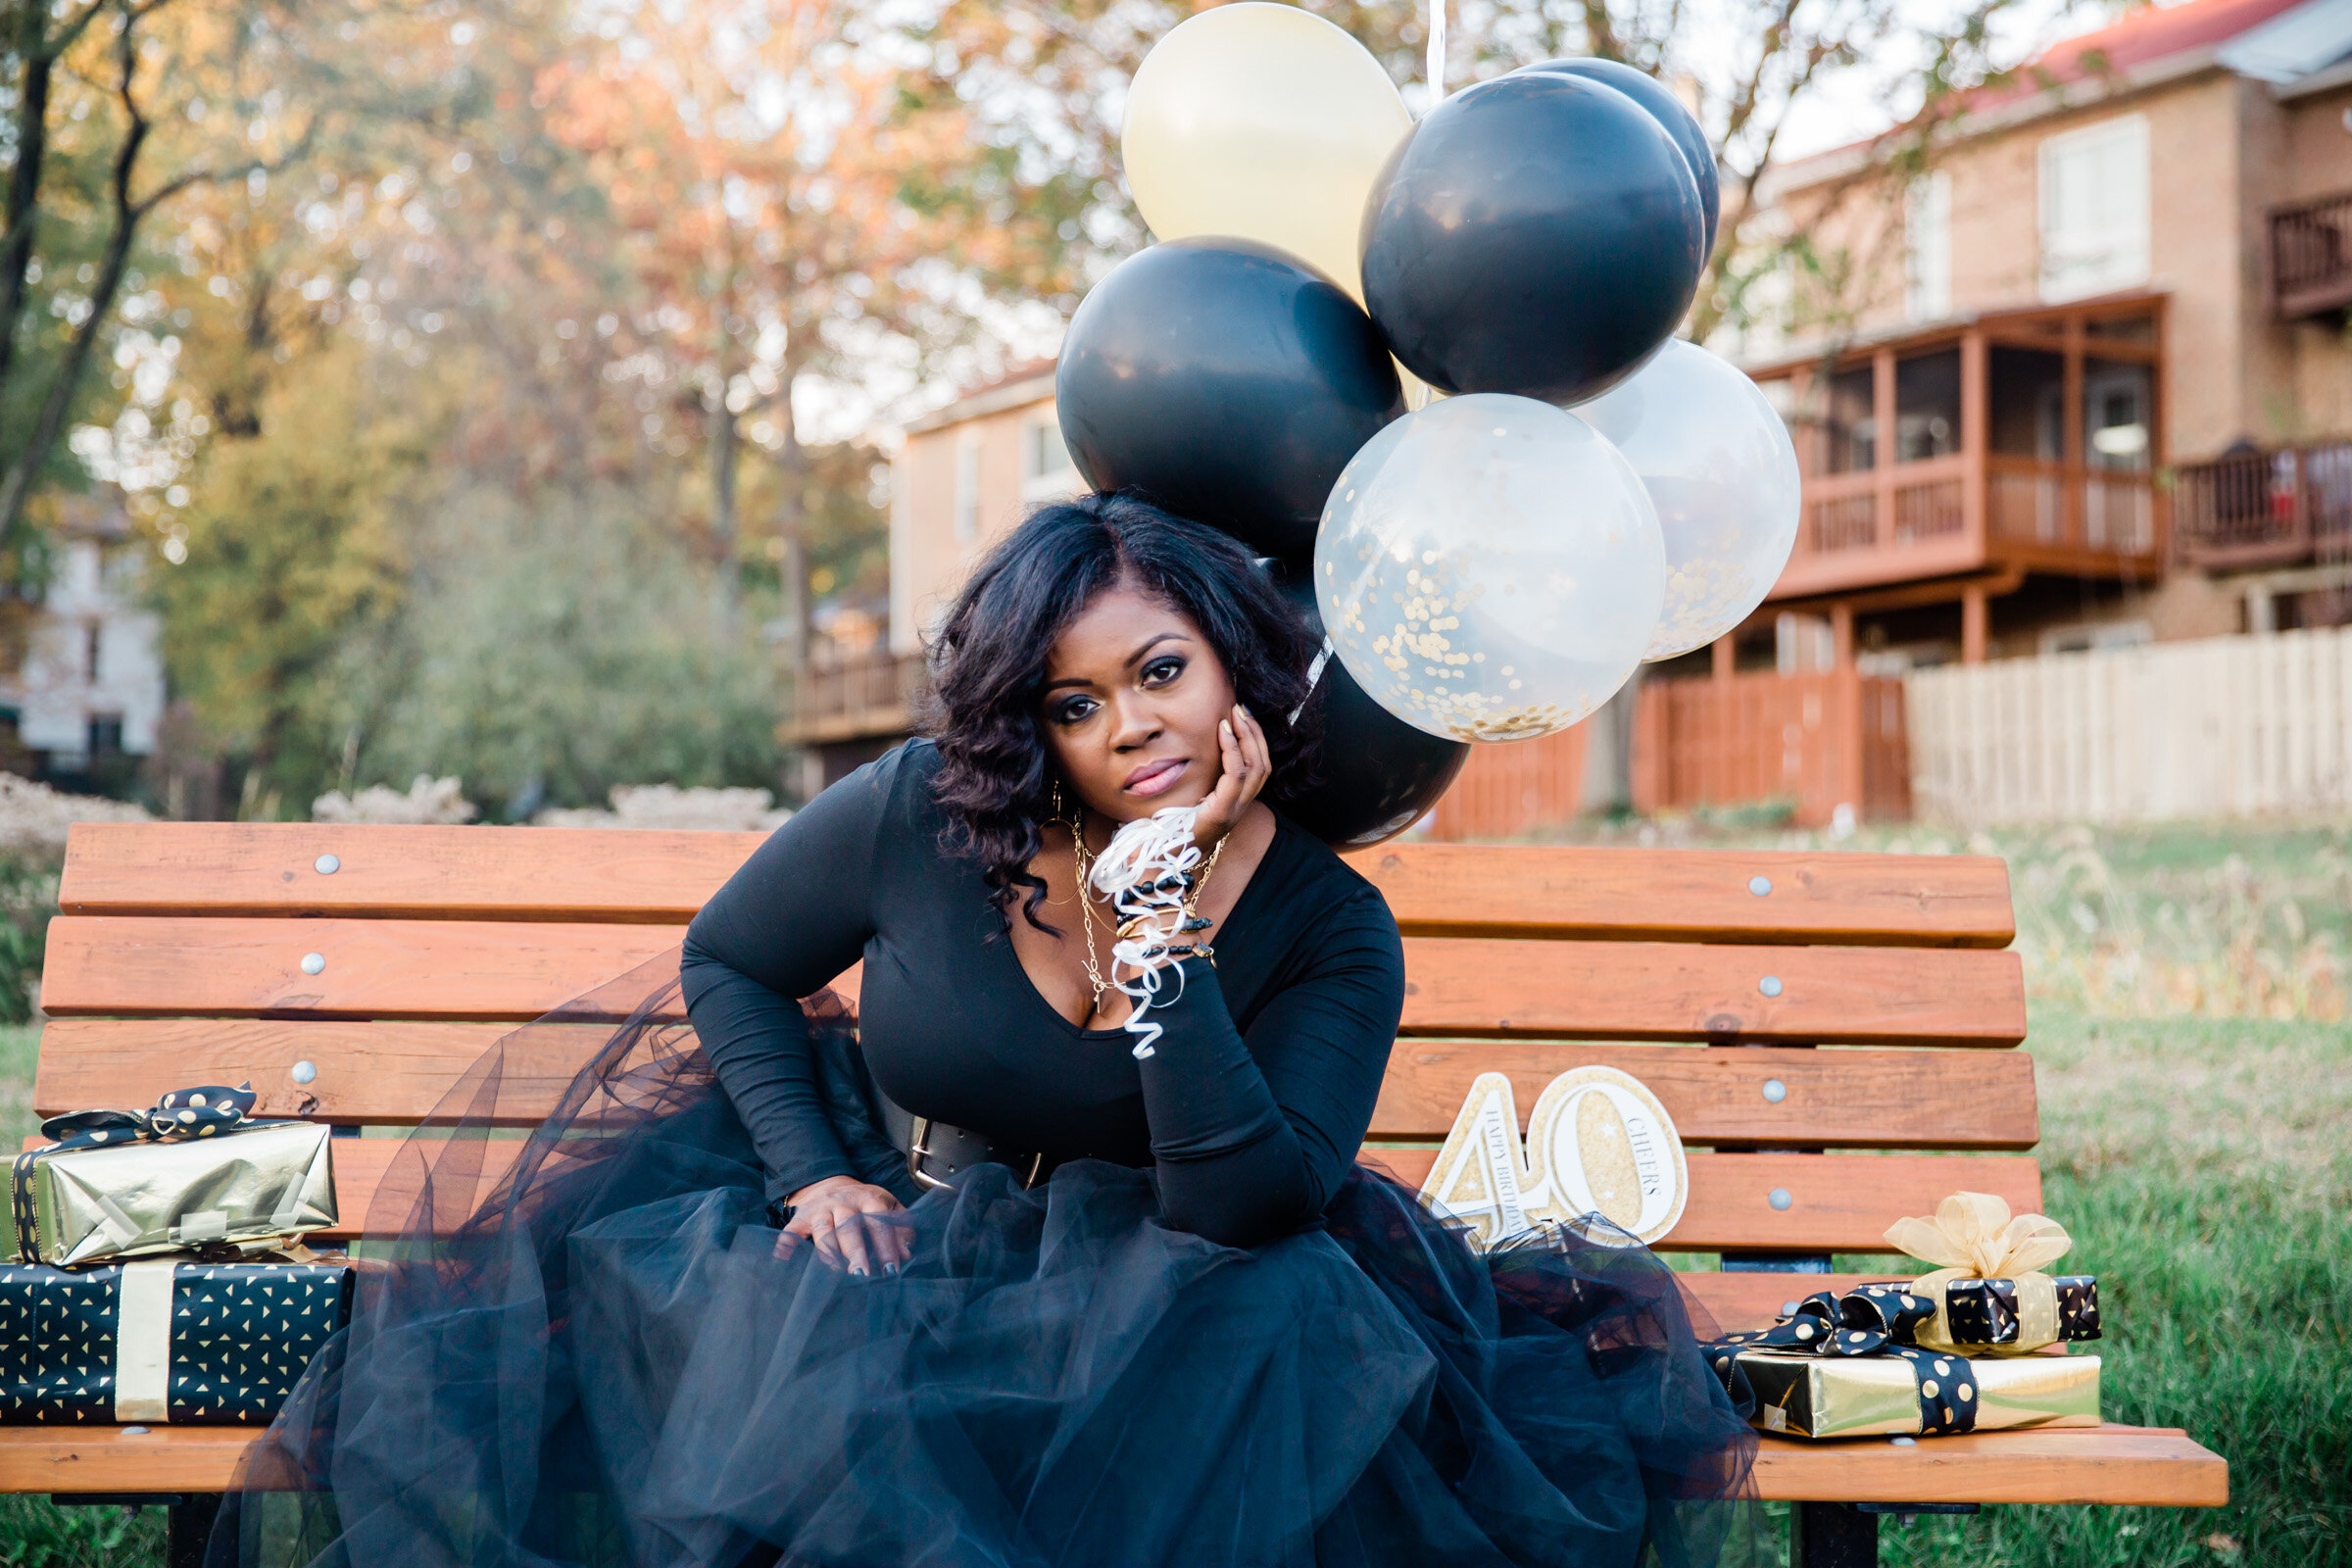 Black Female Portrait Photographer in Baltimore 40t Birthday Photoshoot by Megapixels Media Photography-52.jpg